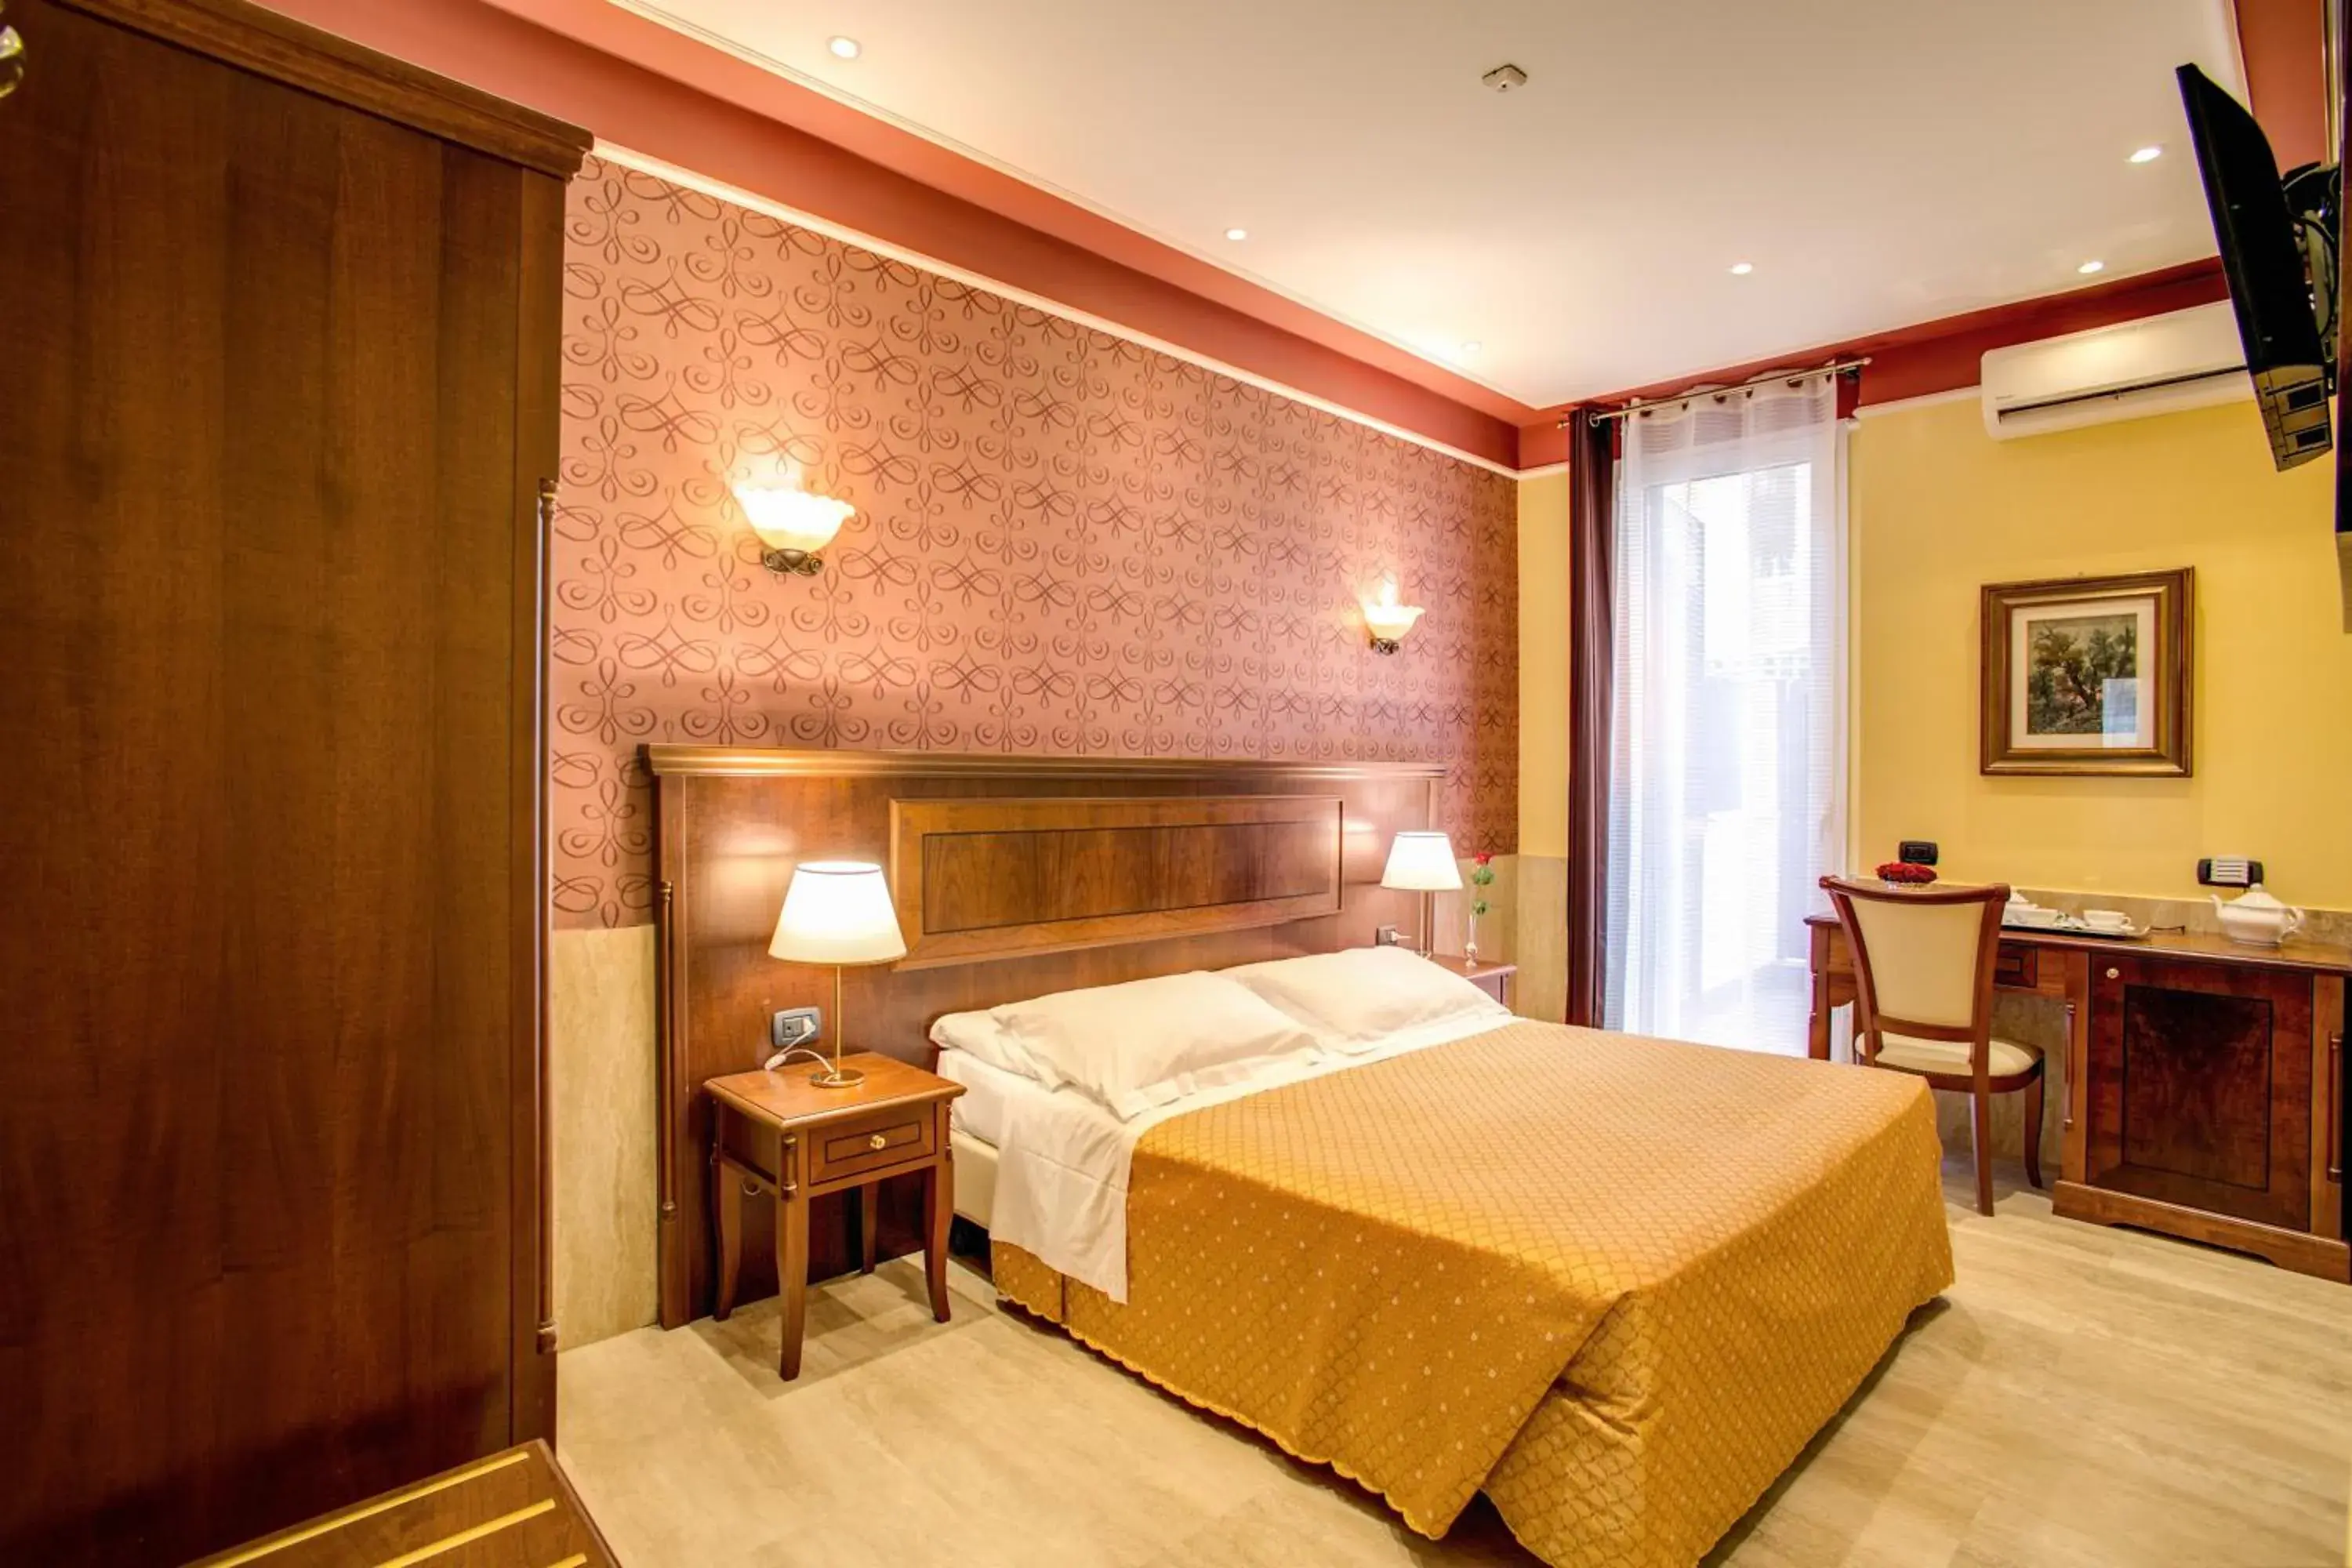 Bed, Room Photo in Aurelius Art Gallery Hotel